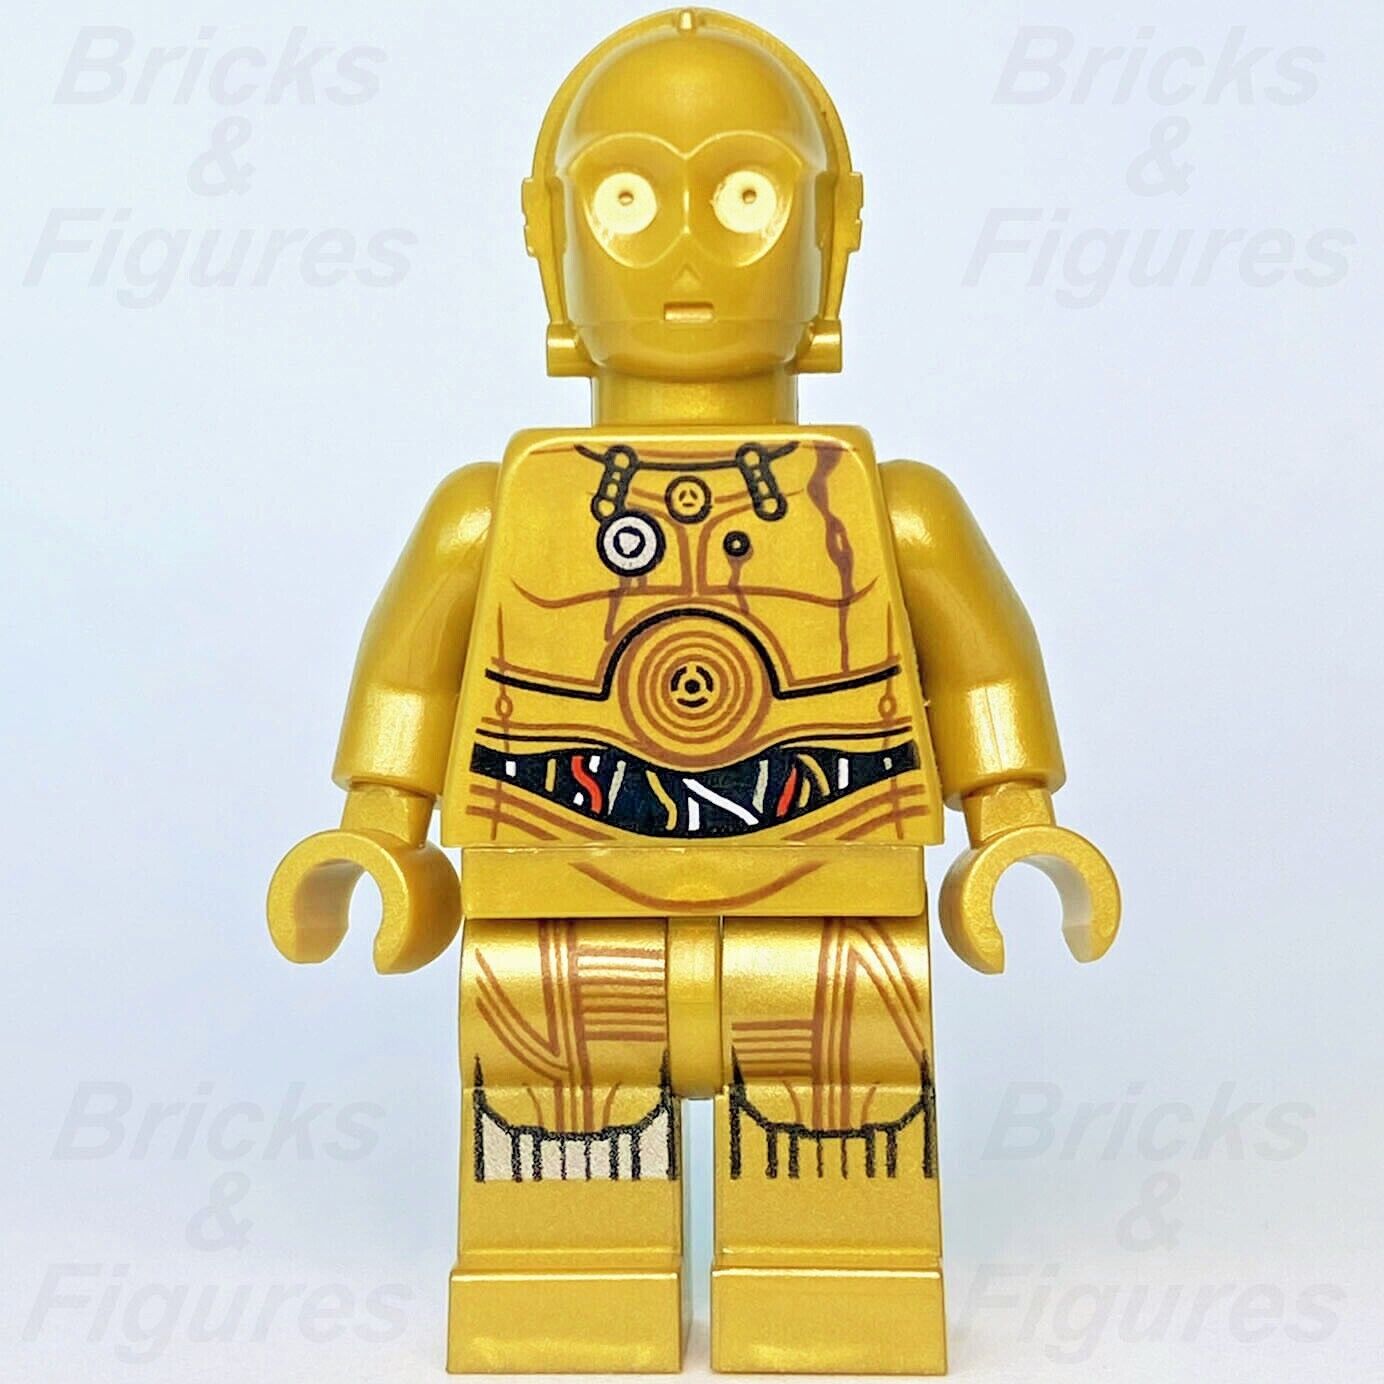 Star Wars LEGO C-3PO Protocol Droid Restraining Bolt Minifigure 75059 sw0561 - Bricks & Figures